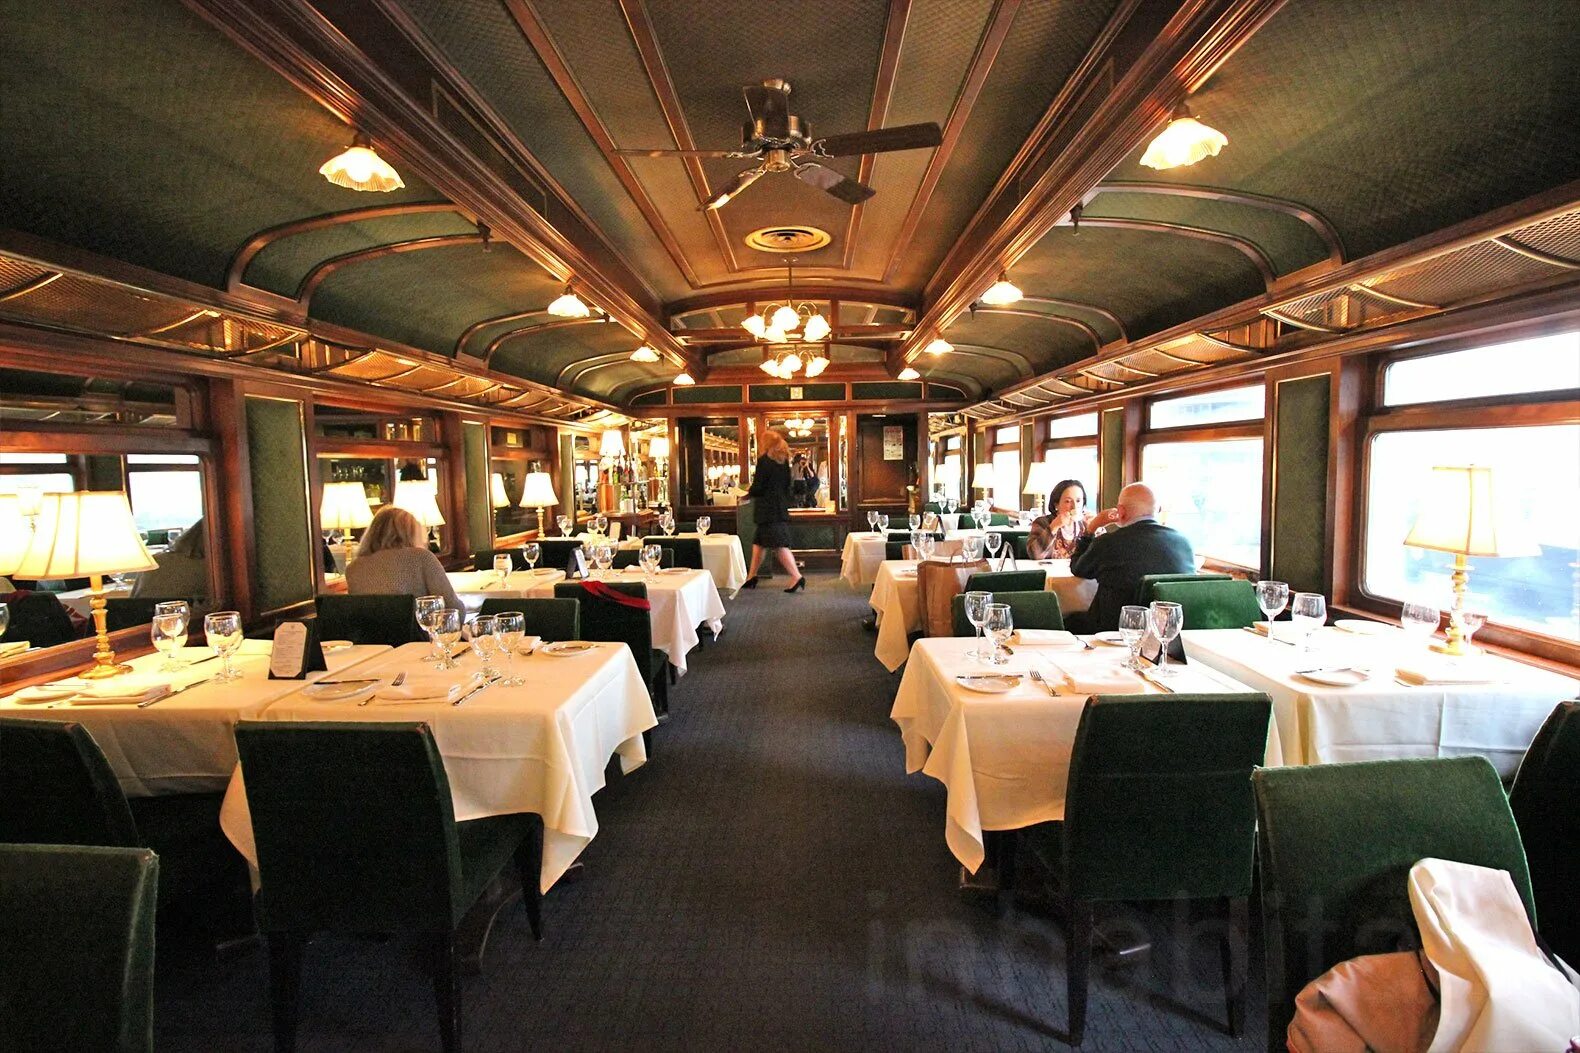 Le Train bleu ресторан. Двухэтажный вагон ресторан. Пассажирский вагон ресторан. Вагон ресторан ресторан.